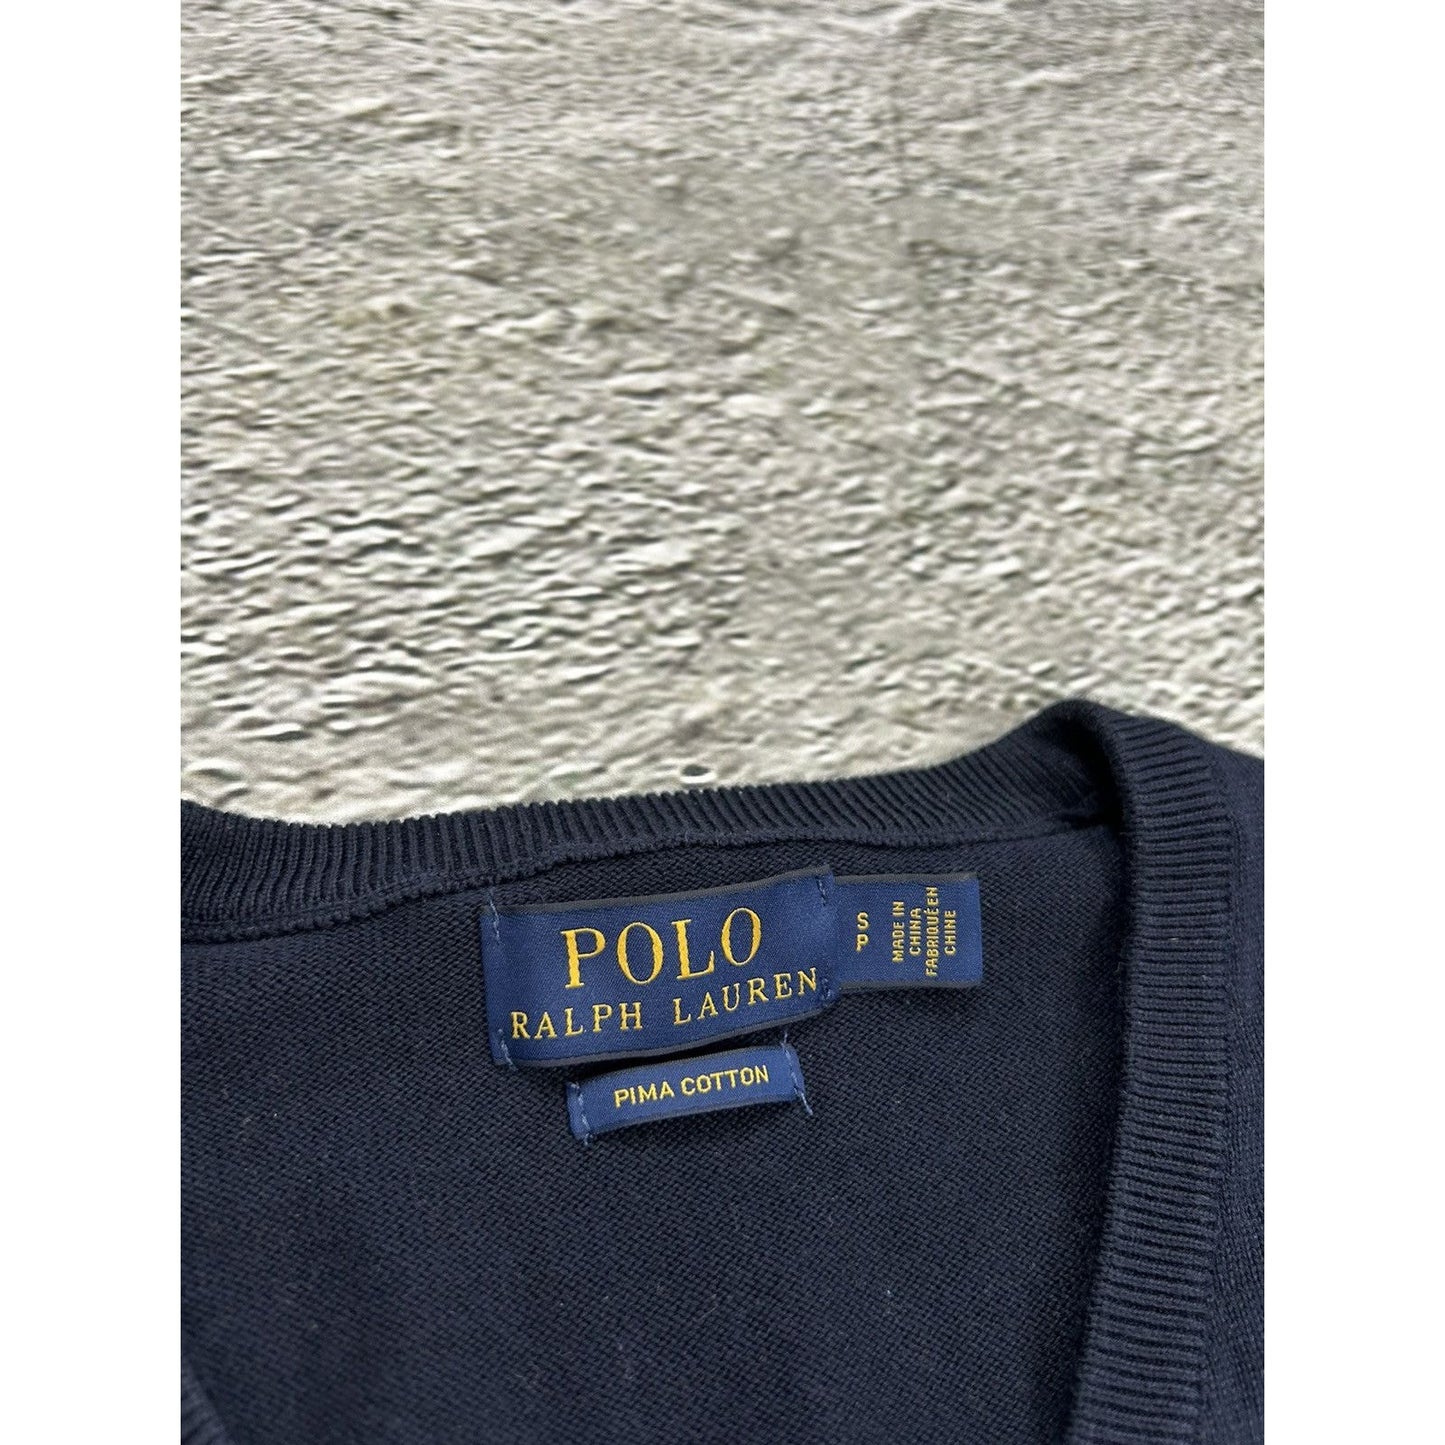 Polo Ralph Lauren vintage navy sweater Pima cotton vneck